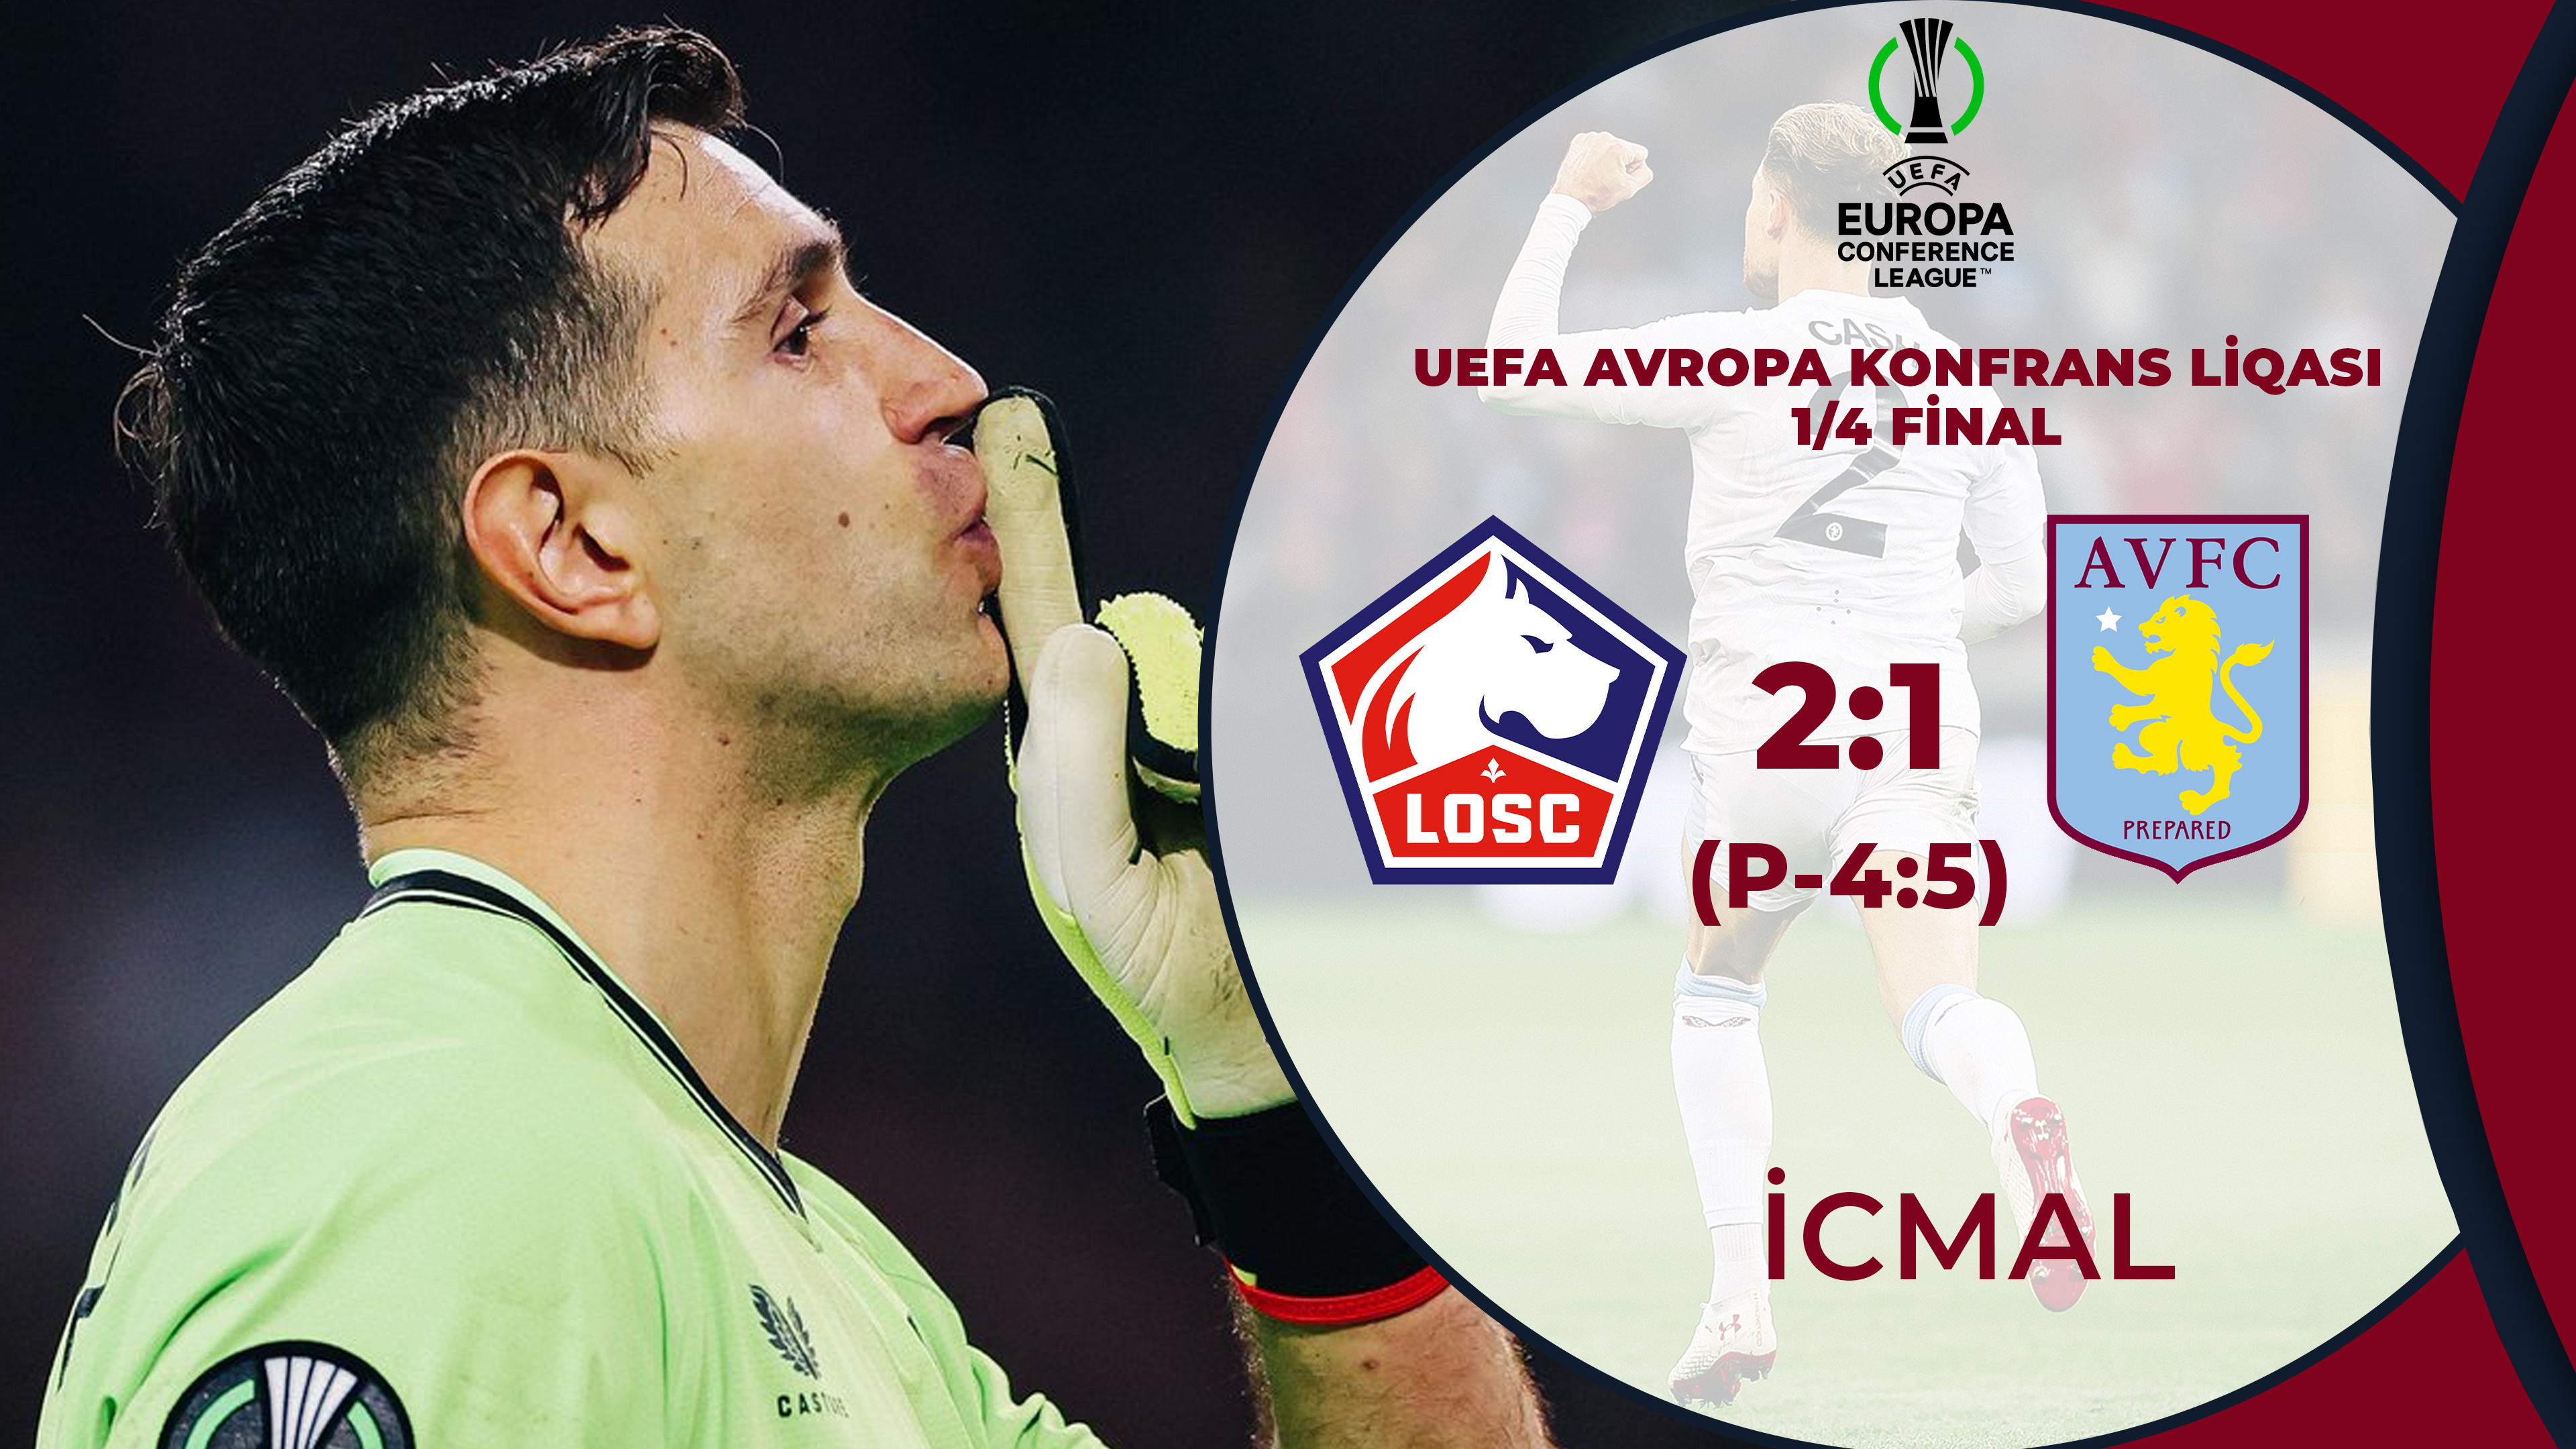 Lill 2:1 (P- 4:5) Aston Villa | UEFA Avropa Konfrans Liqası, 1/4 final | İCMAL